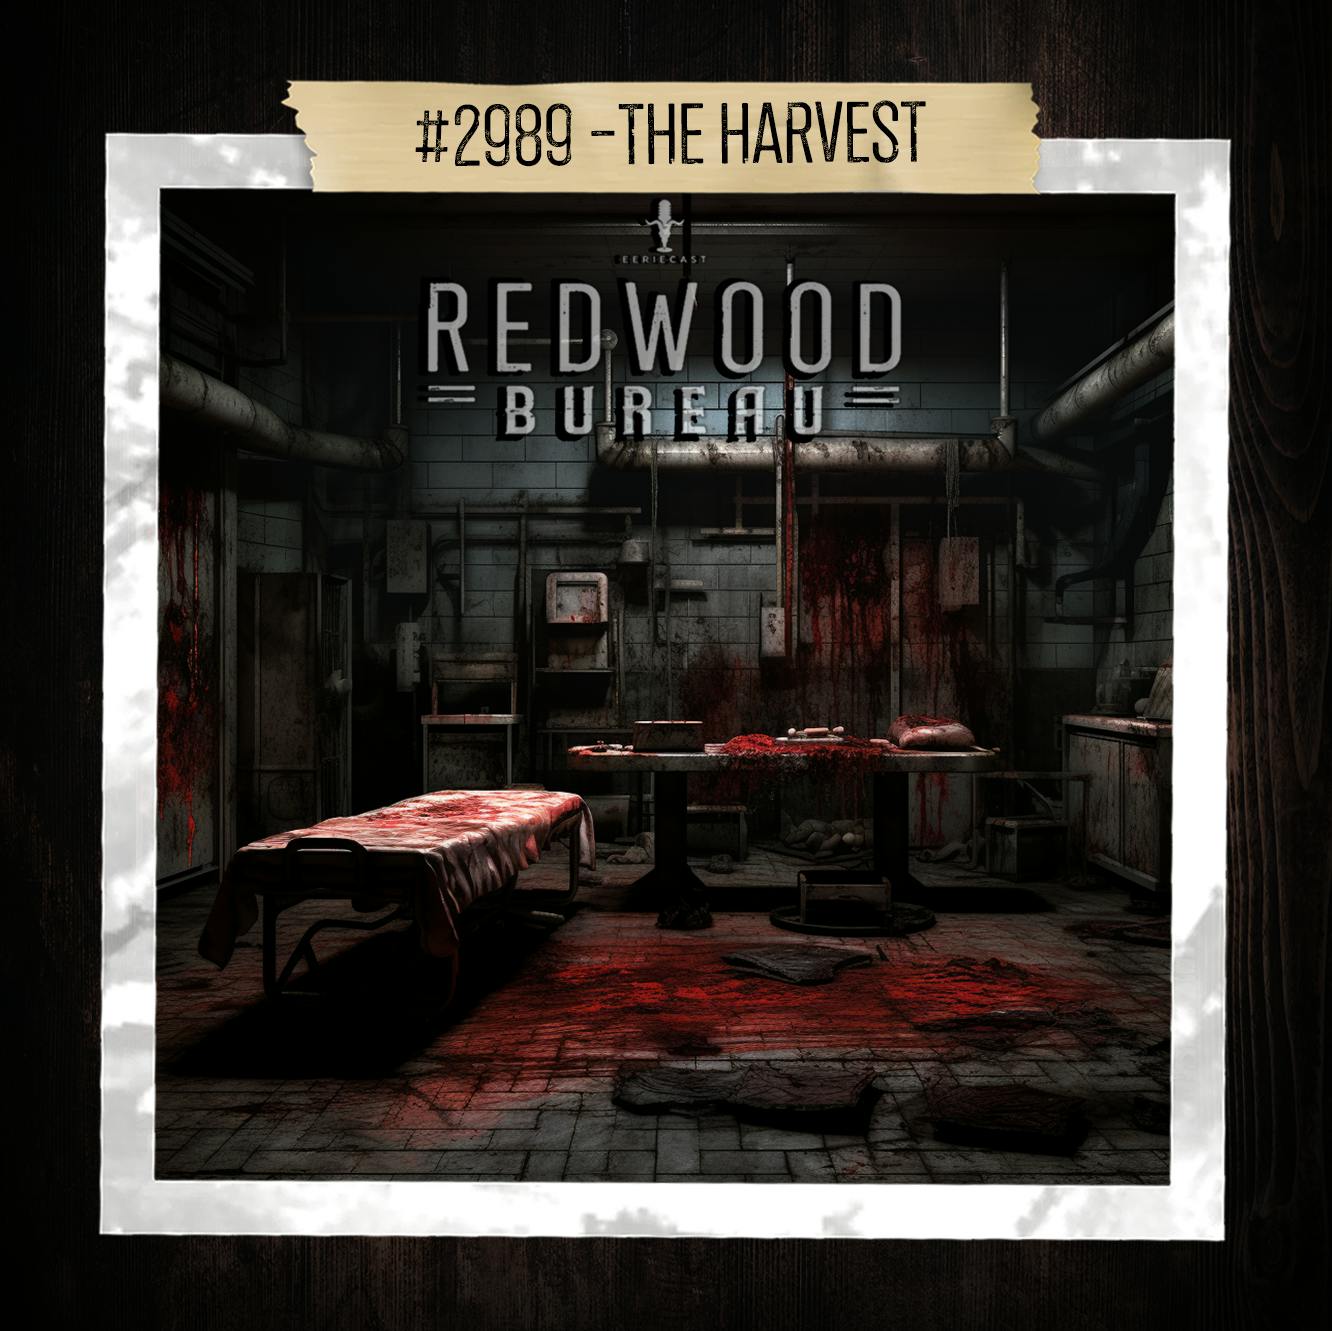 "THE HARVEST" - Redwood Bureau Phenomenon #2989